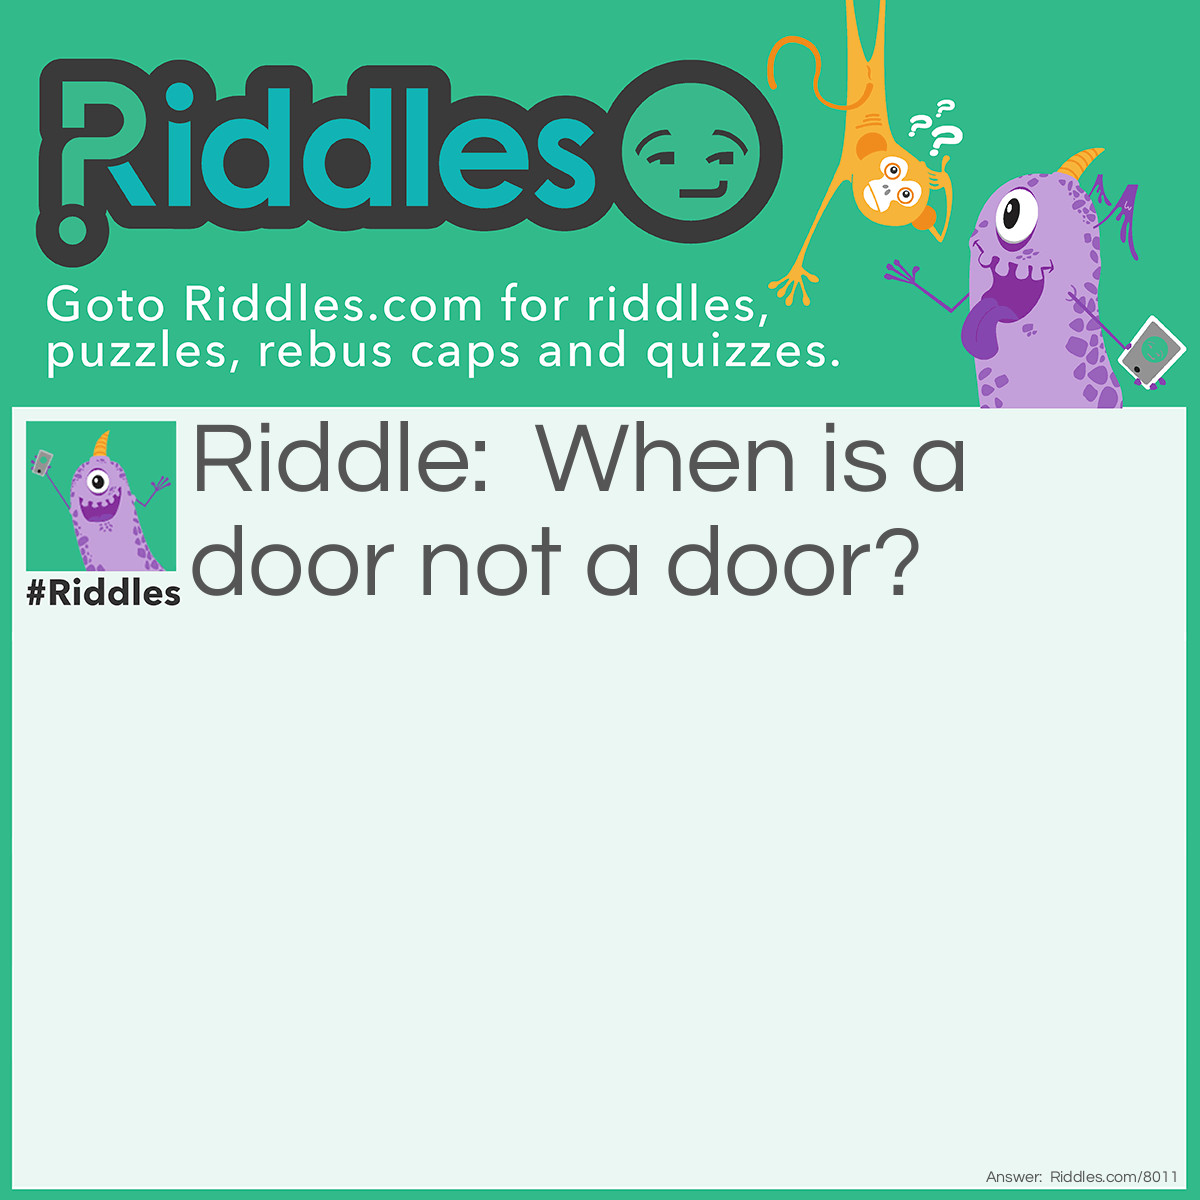 Riddle: When is a door not a door? Answer: When its a jar.